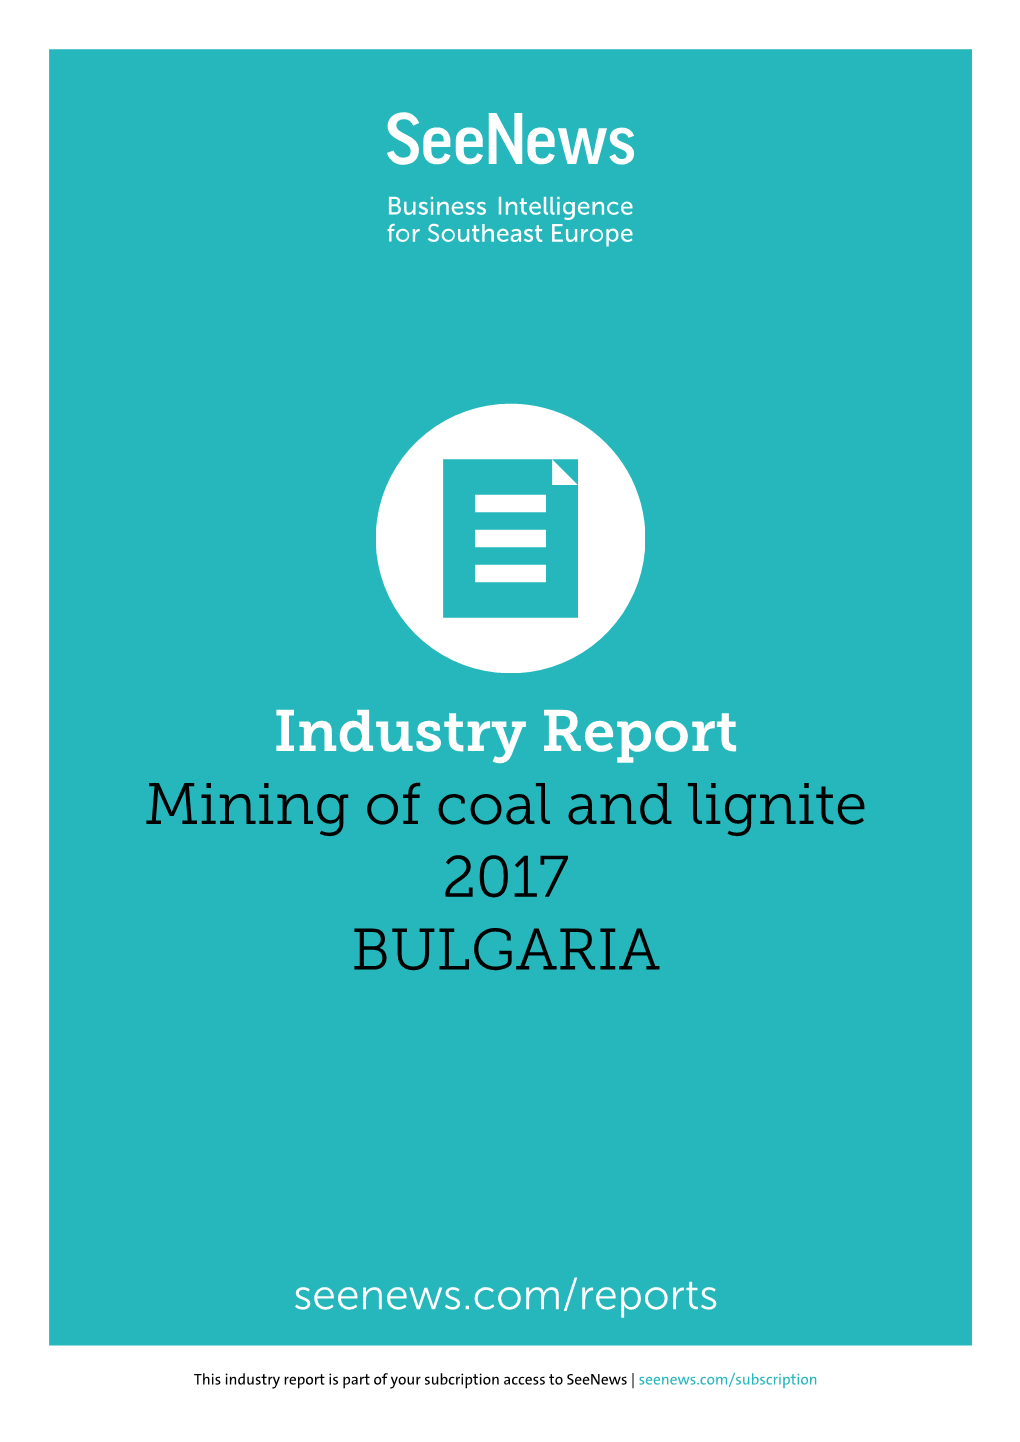 Industry Report Mining of Coal and Lignite 2017 BULGARIA